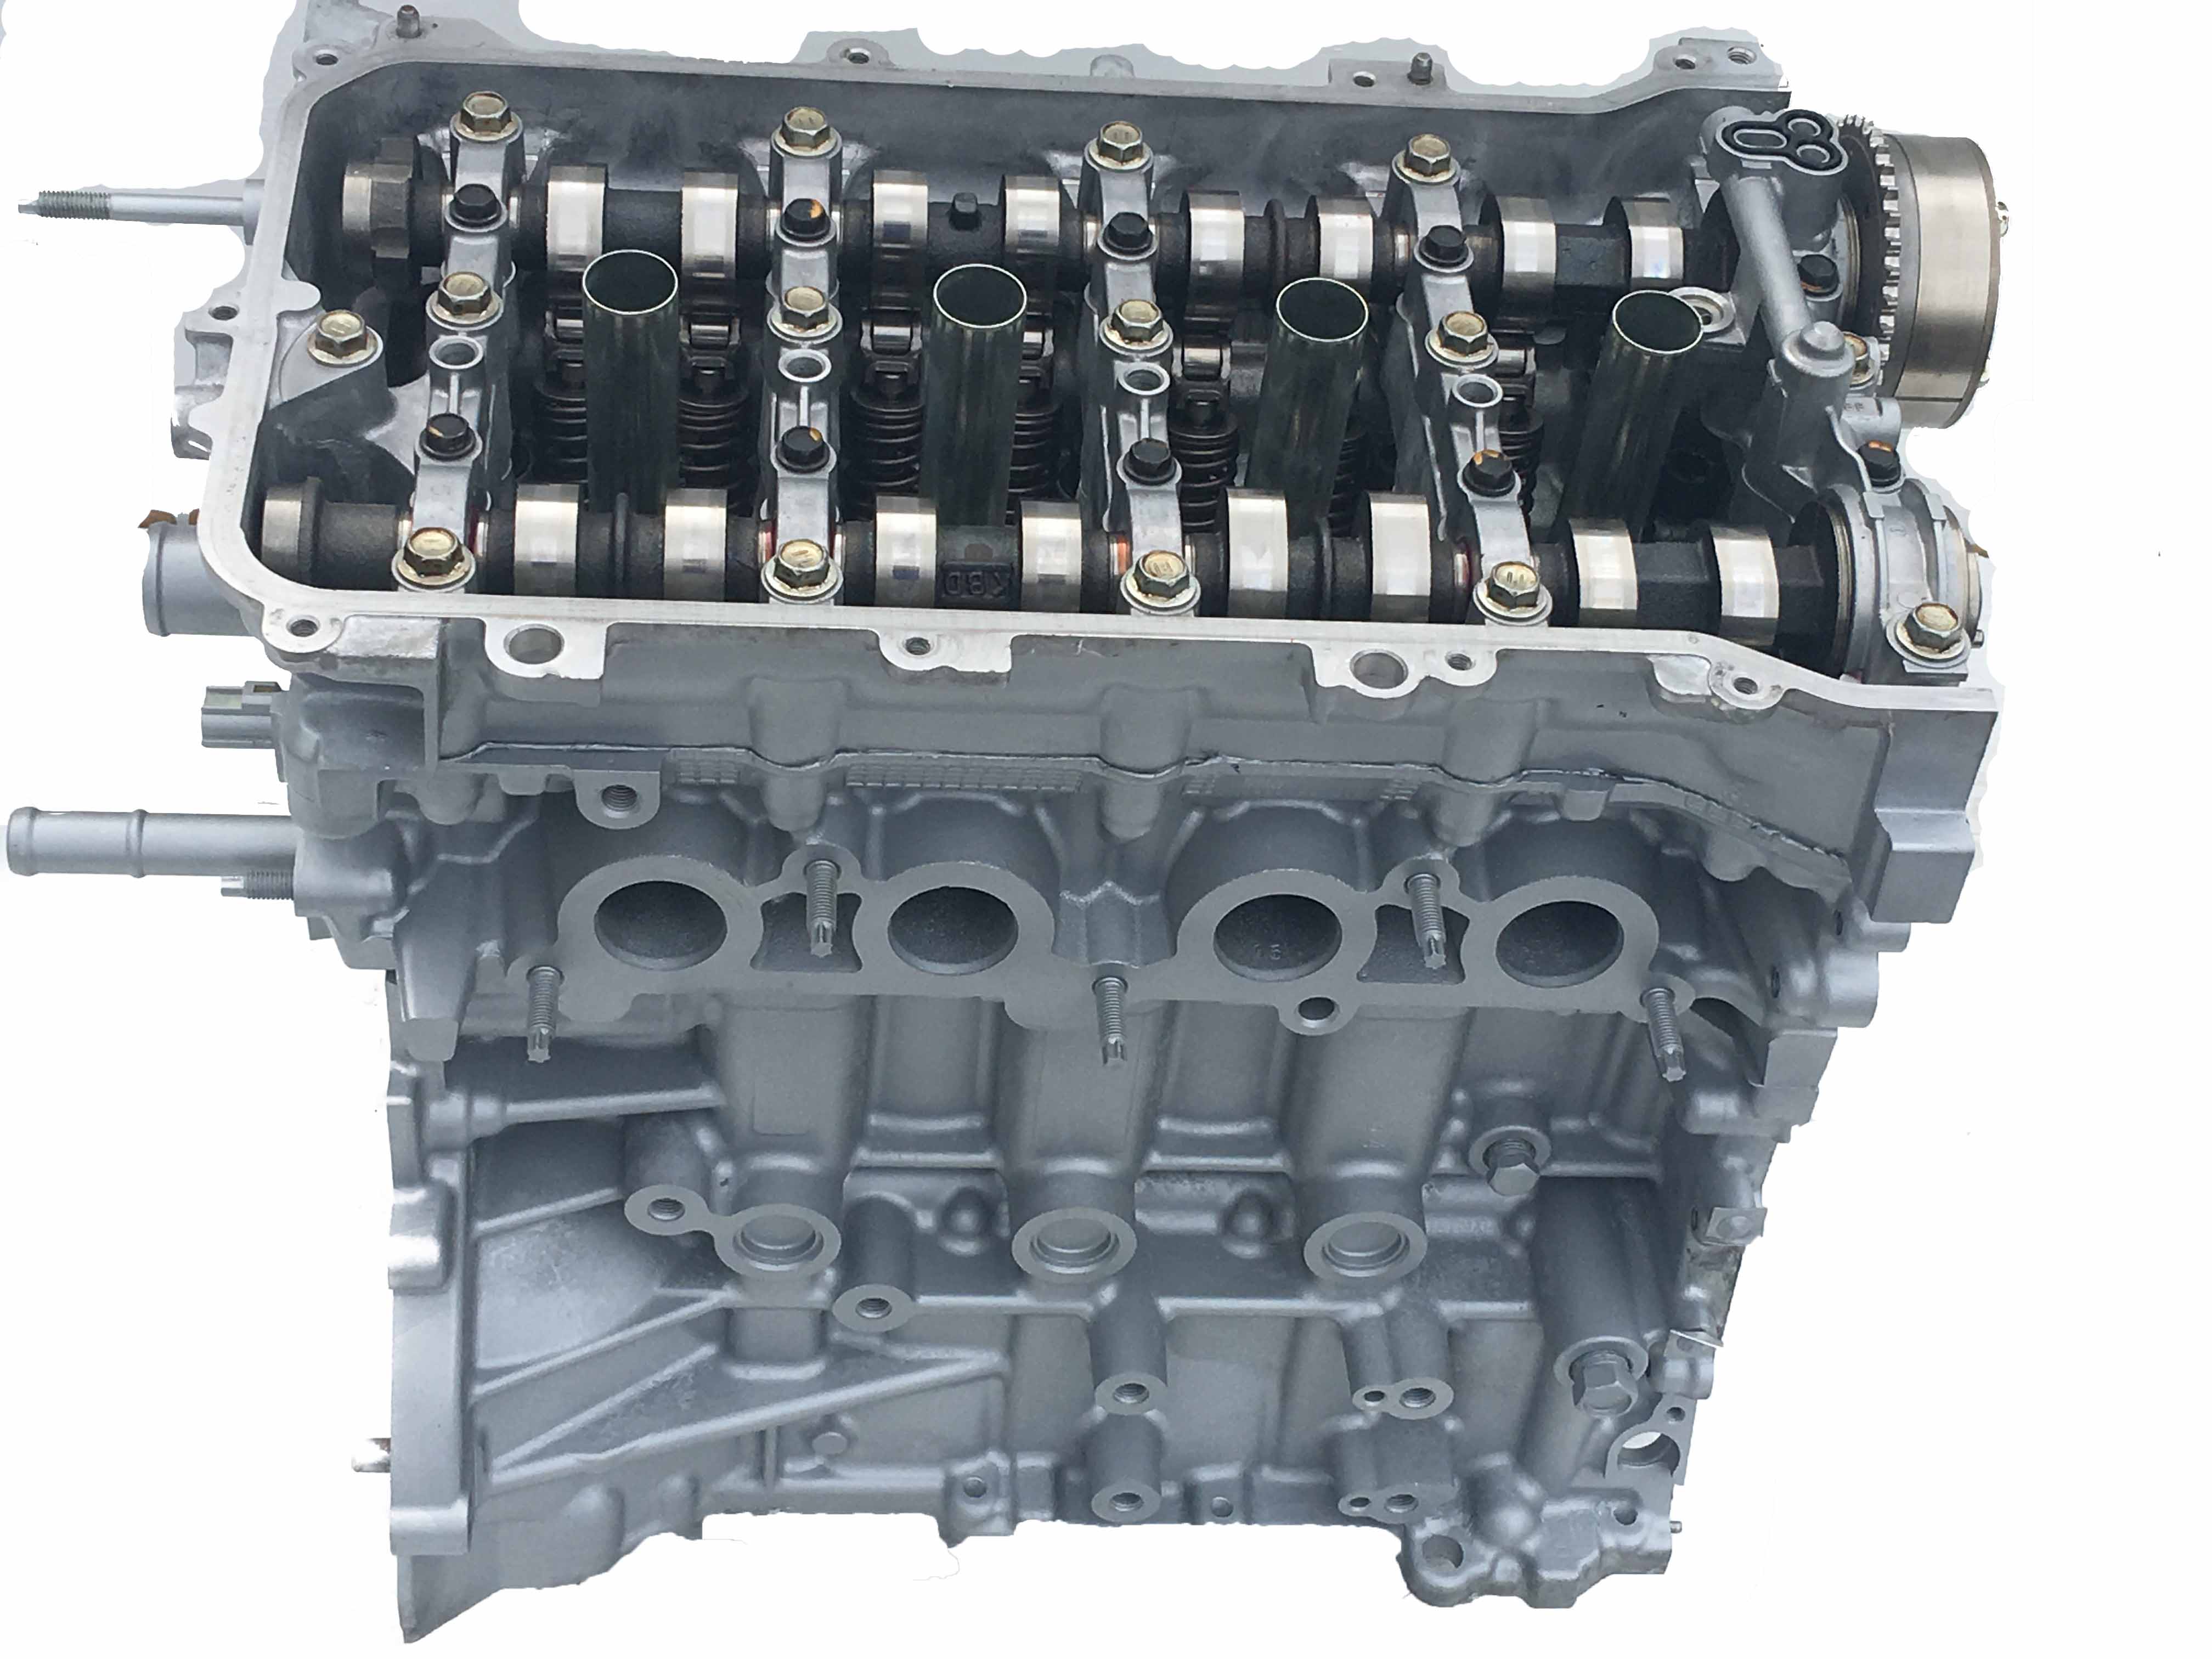 2013 Toyota 2ZR rebuilt engine for Prius